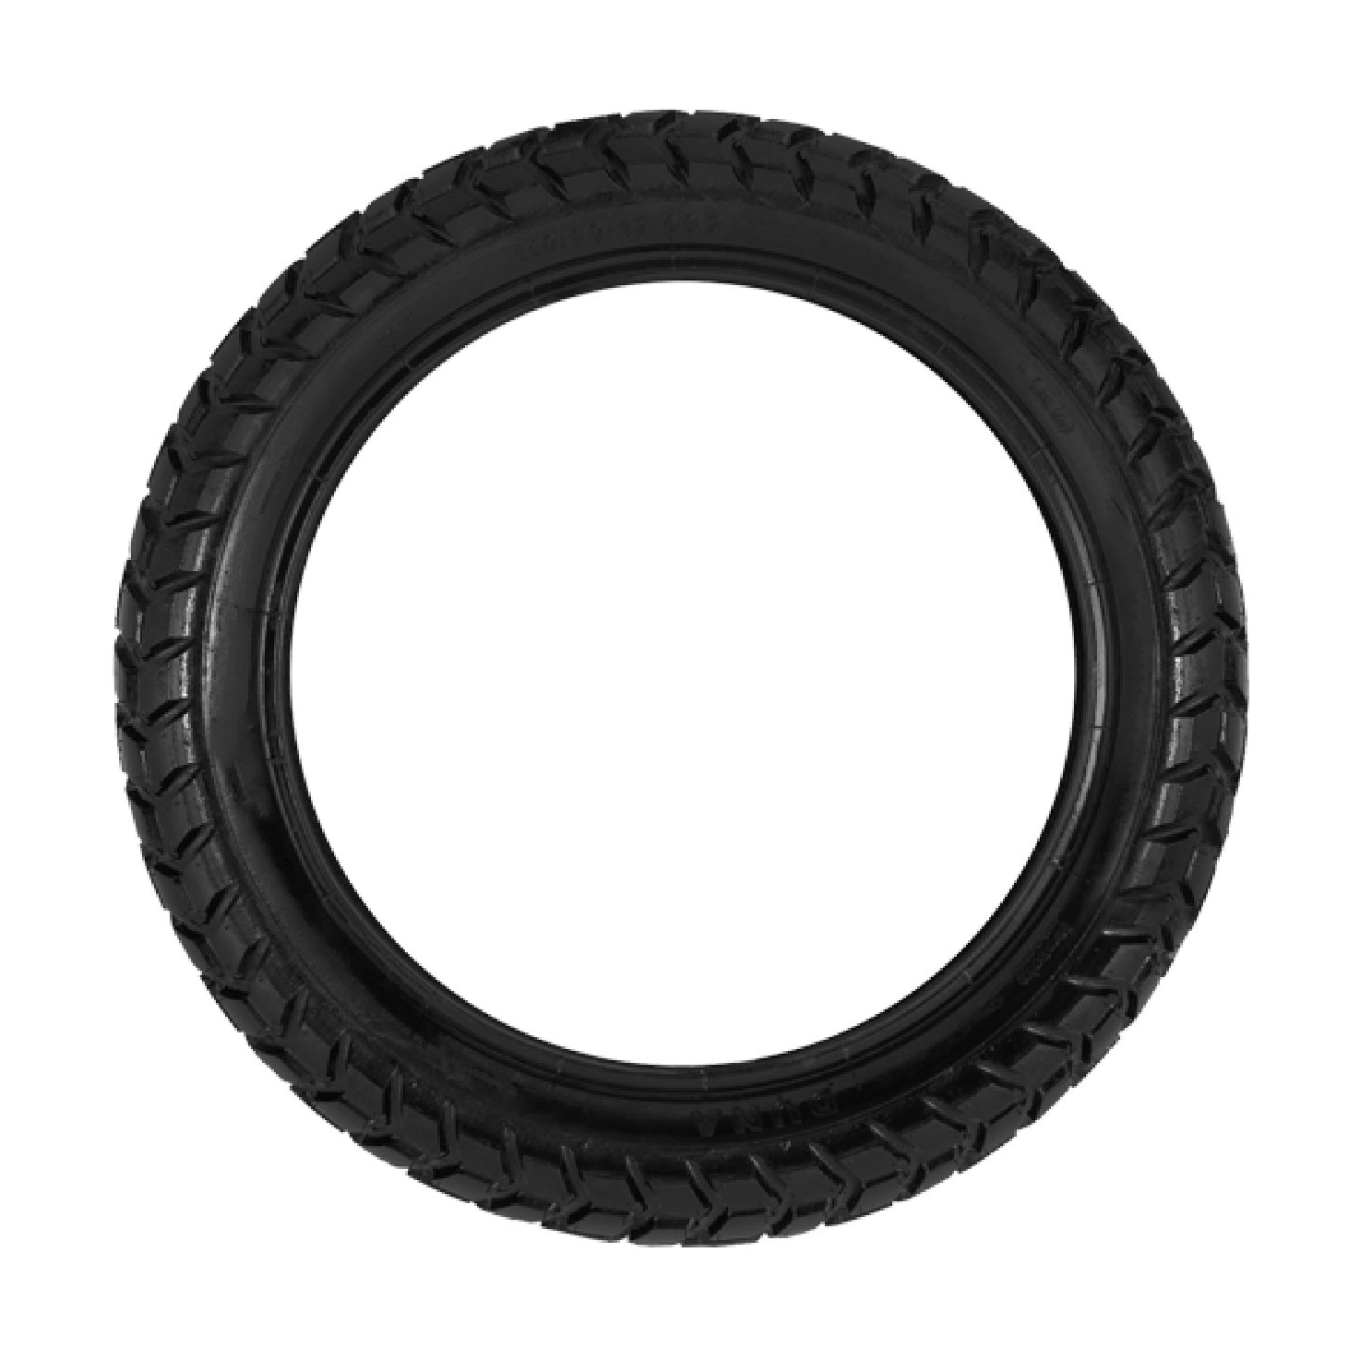 8.5" Tires